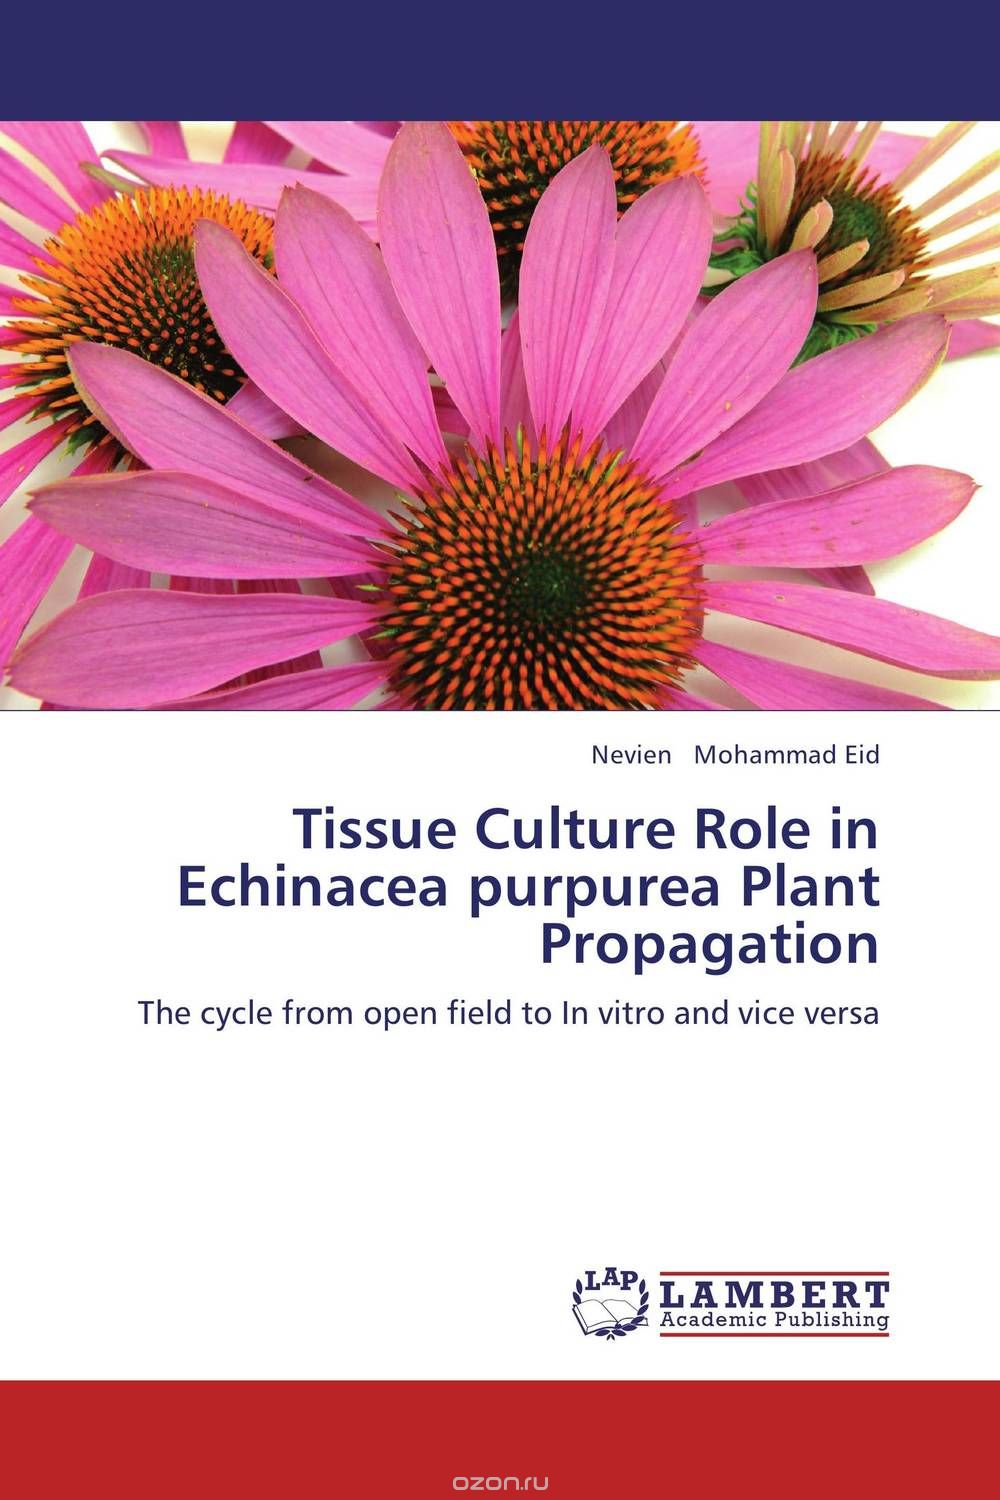 Скачать книгу "Tissue Culture Role in Echinacea purpurea Plant Propagation"